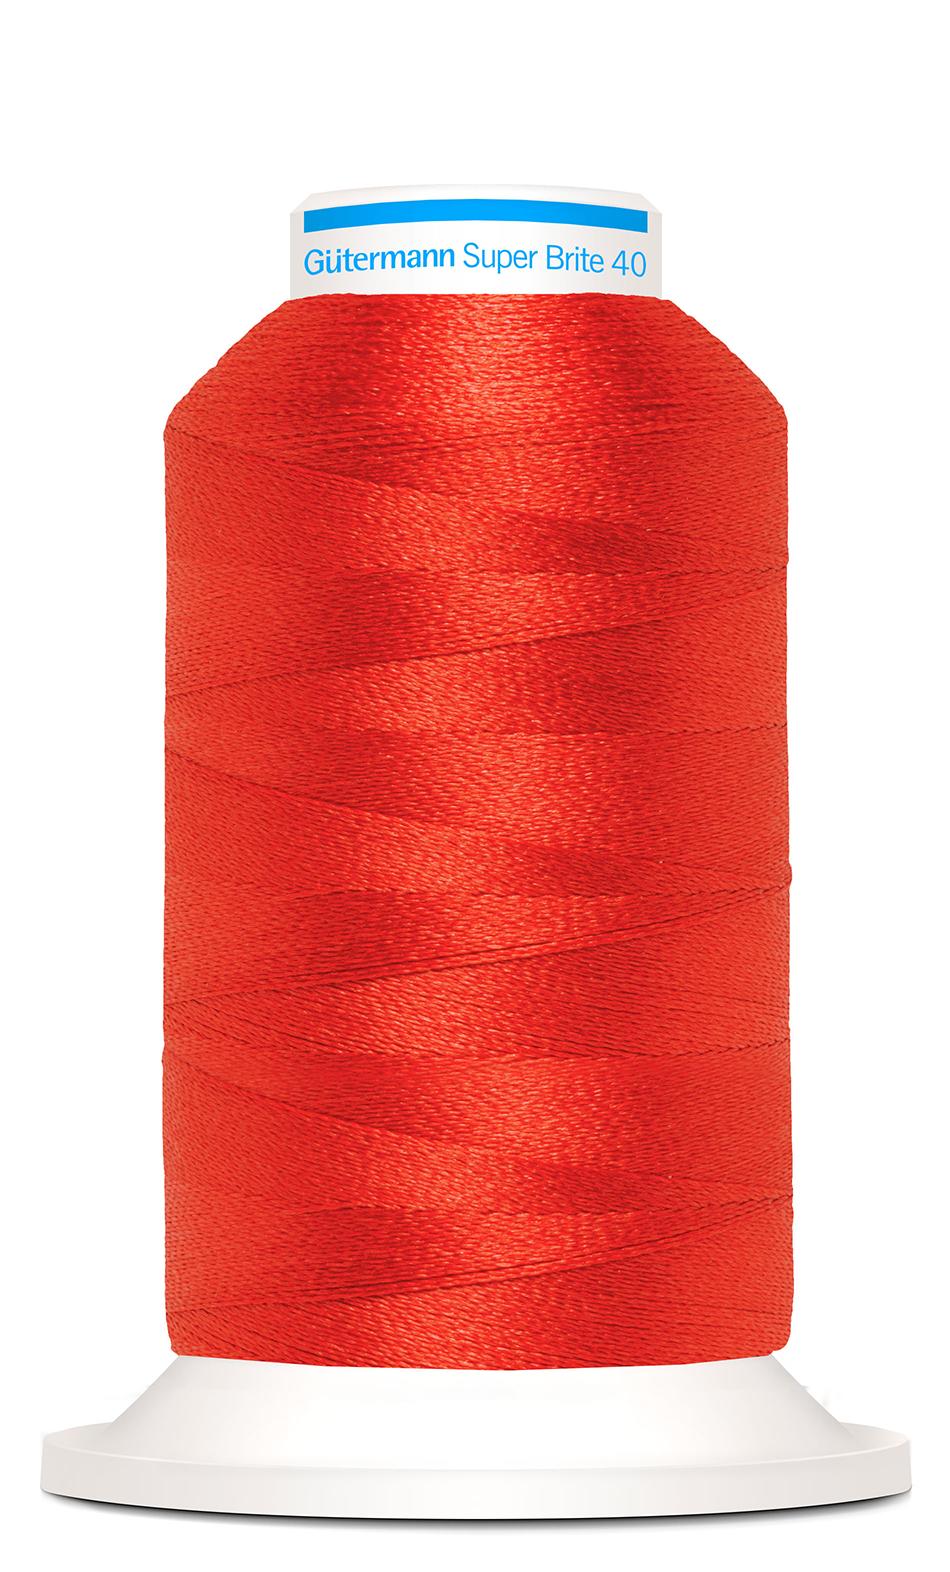 A bright red Gutermann Superbrite Machine Embroidery thread